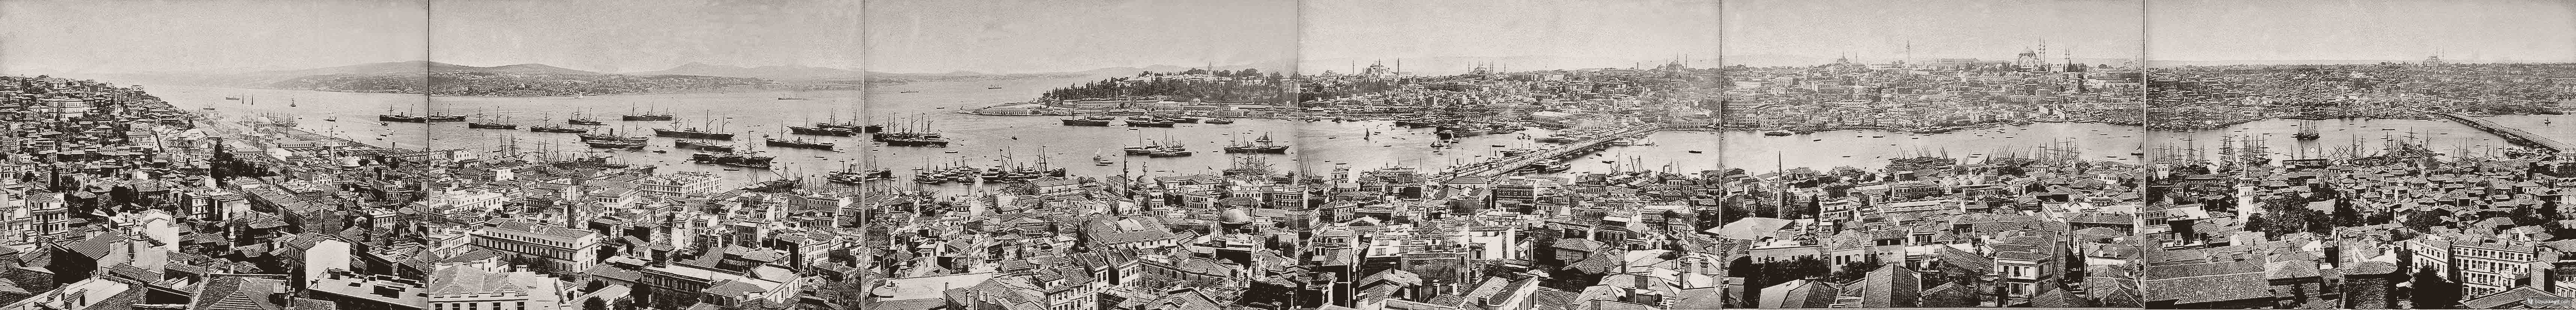 ISTANBUL-Panorama1